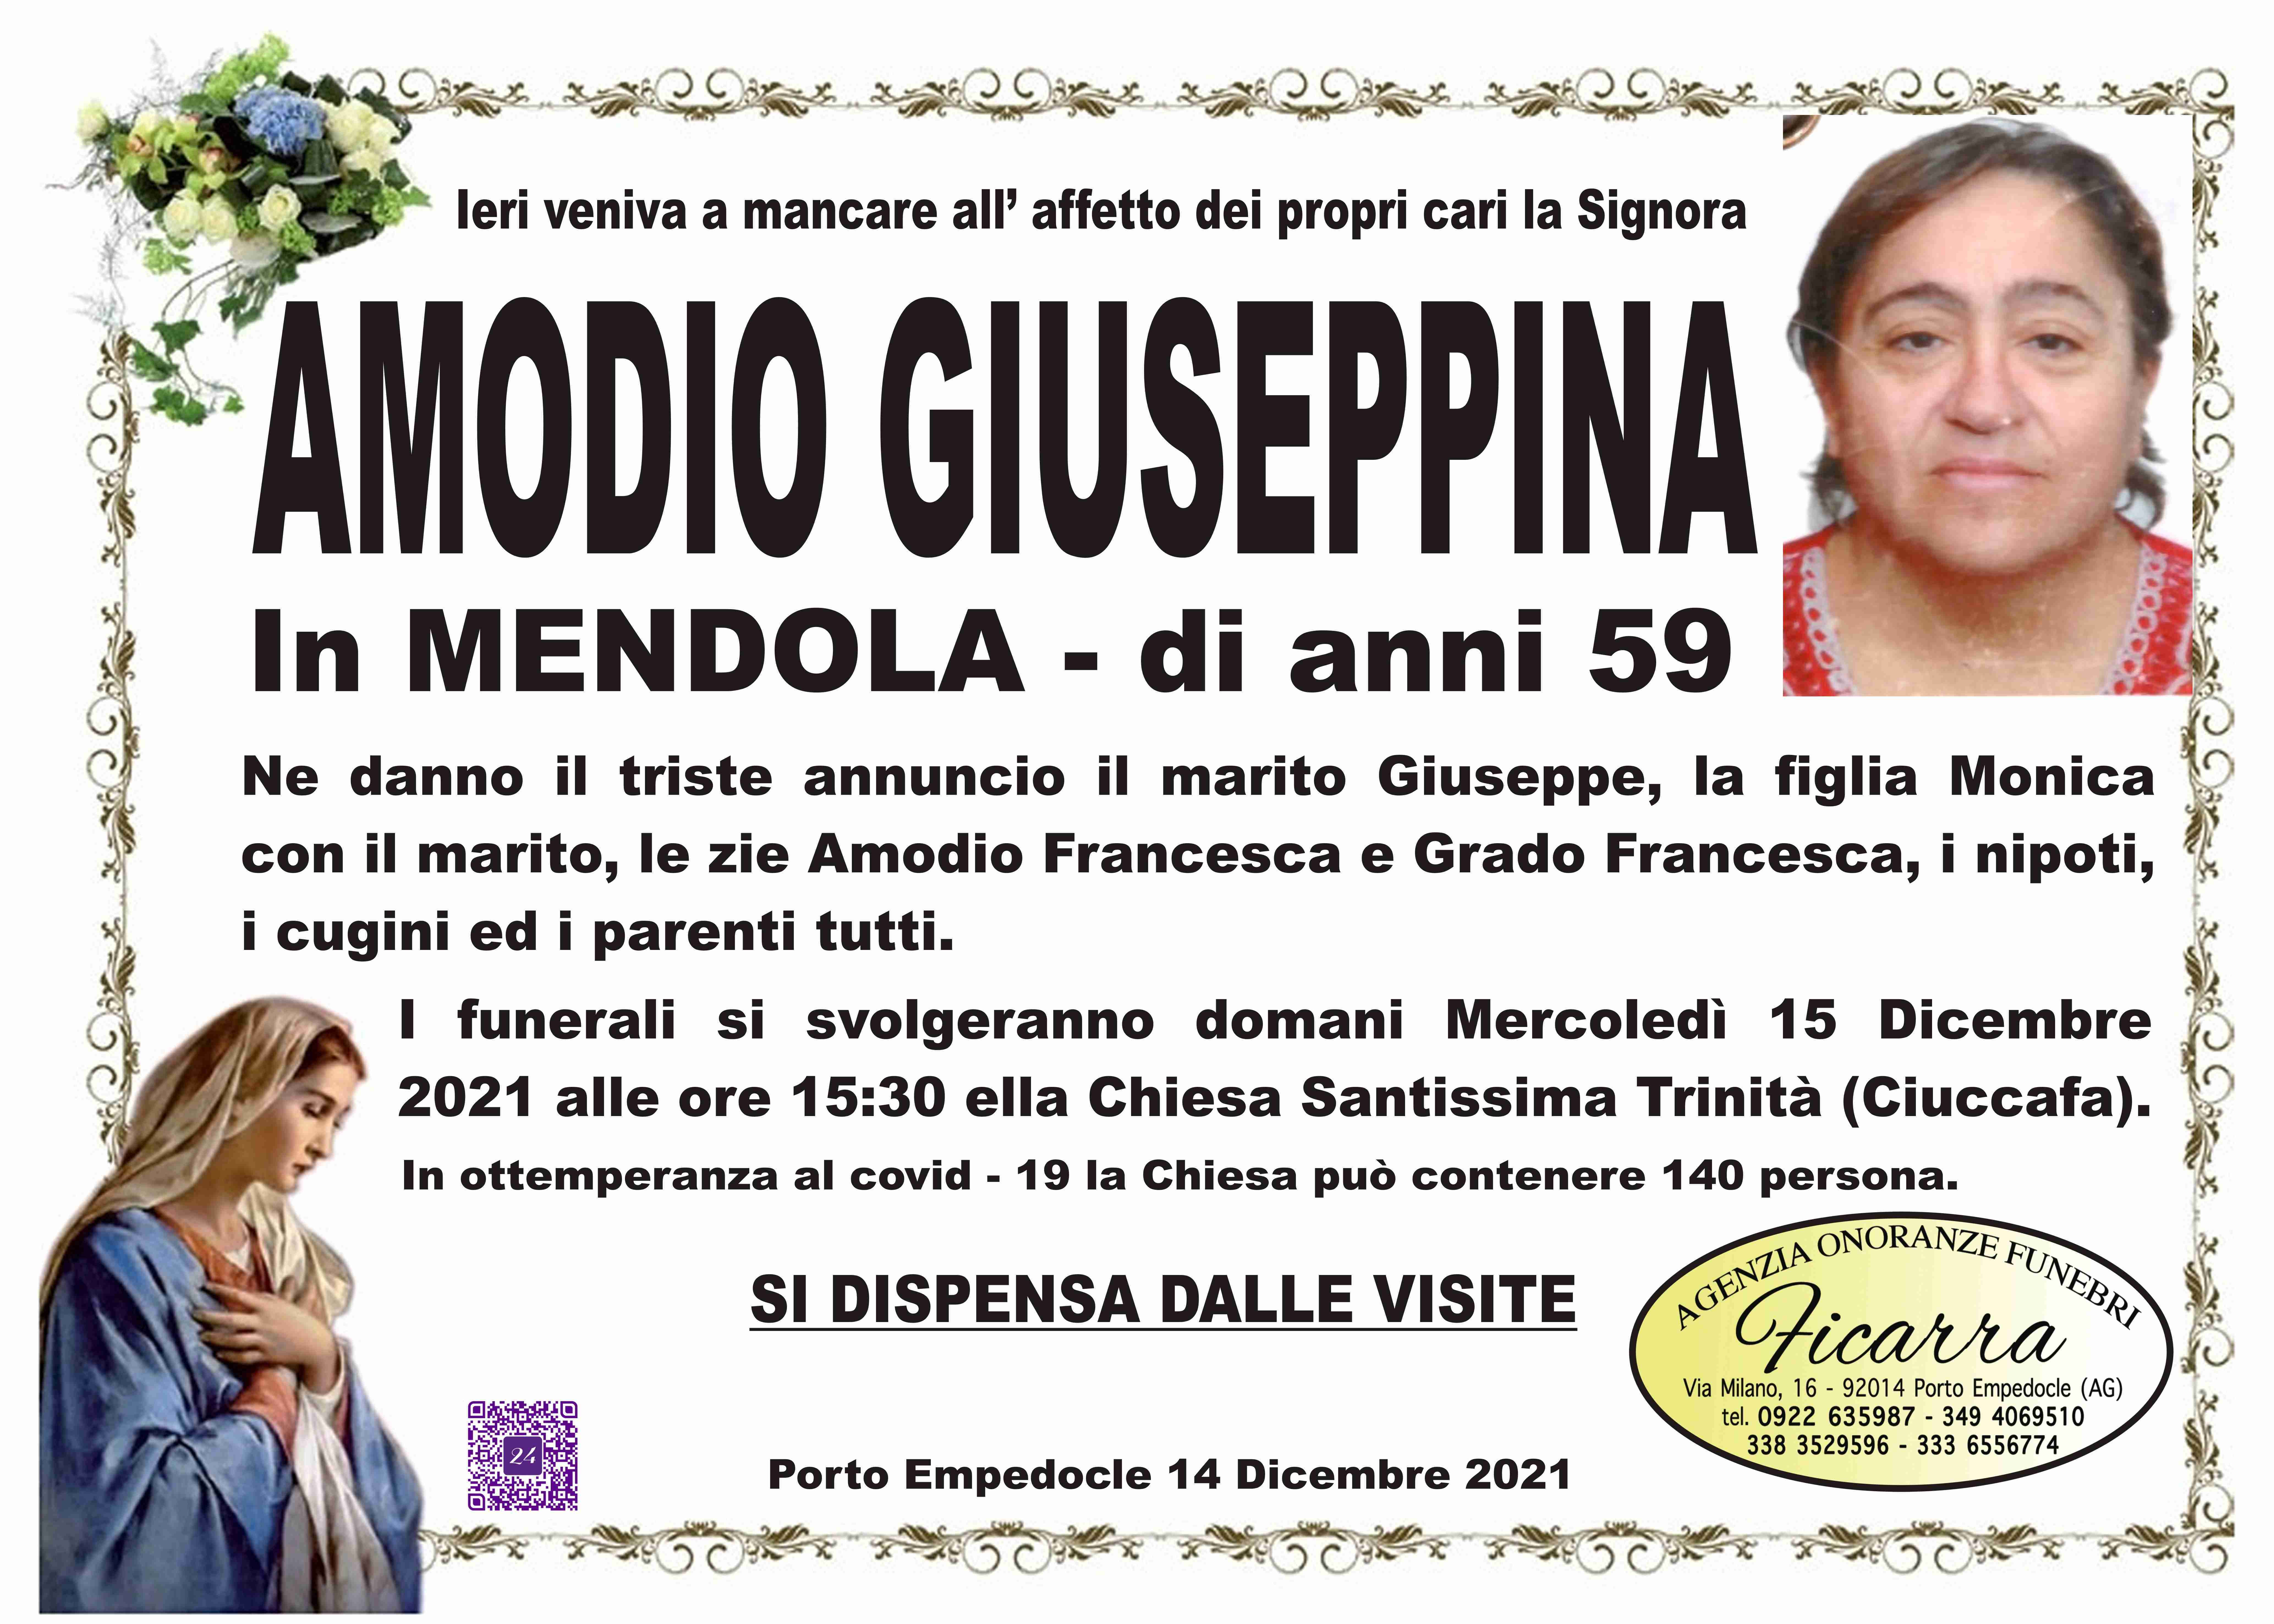 Giuseppina Amodio